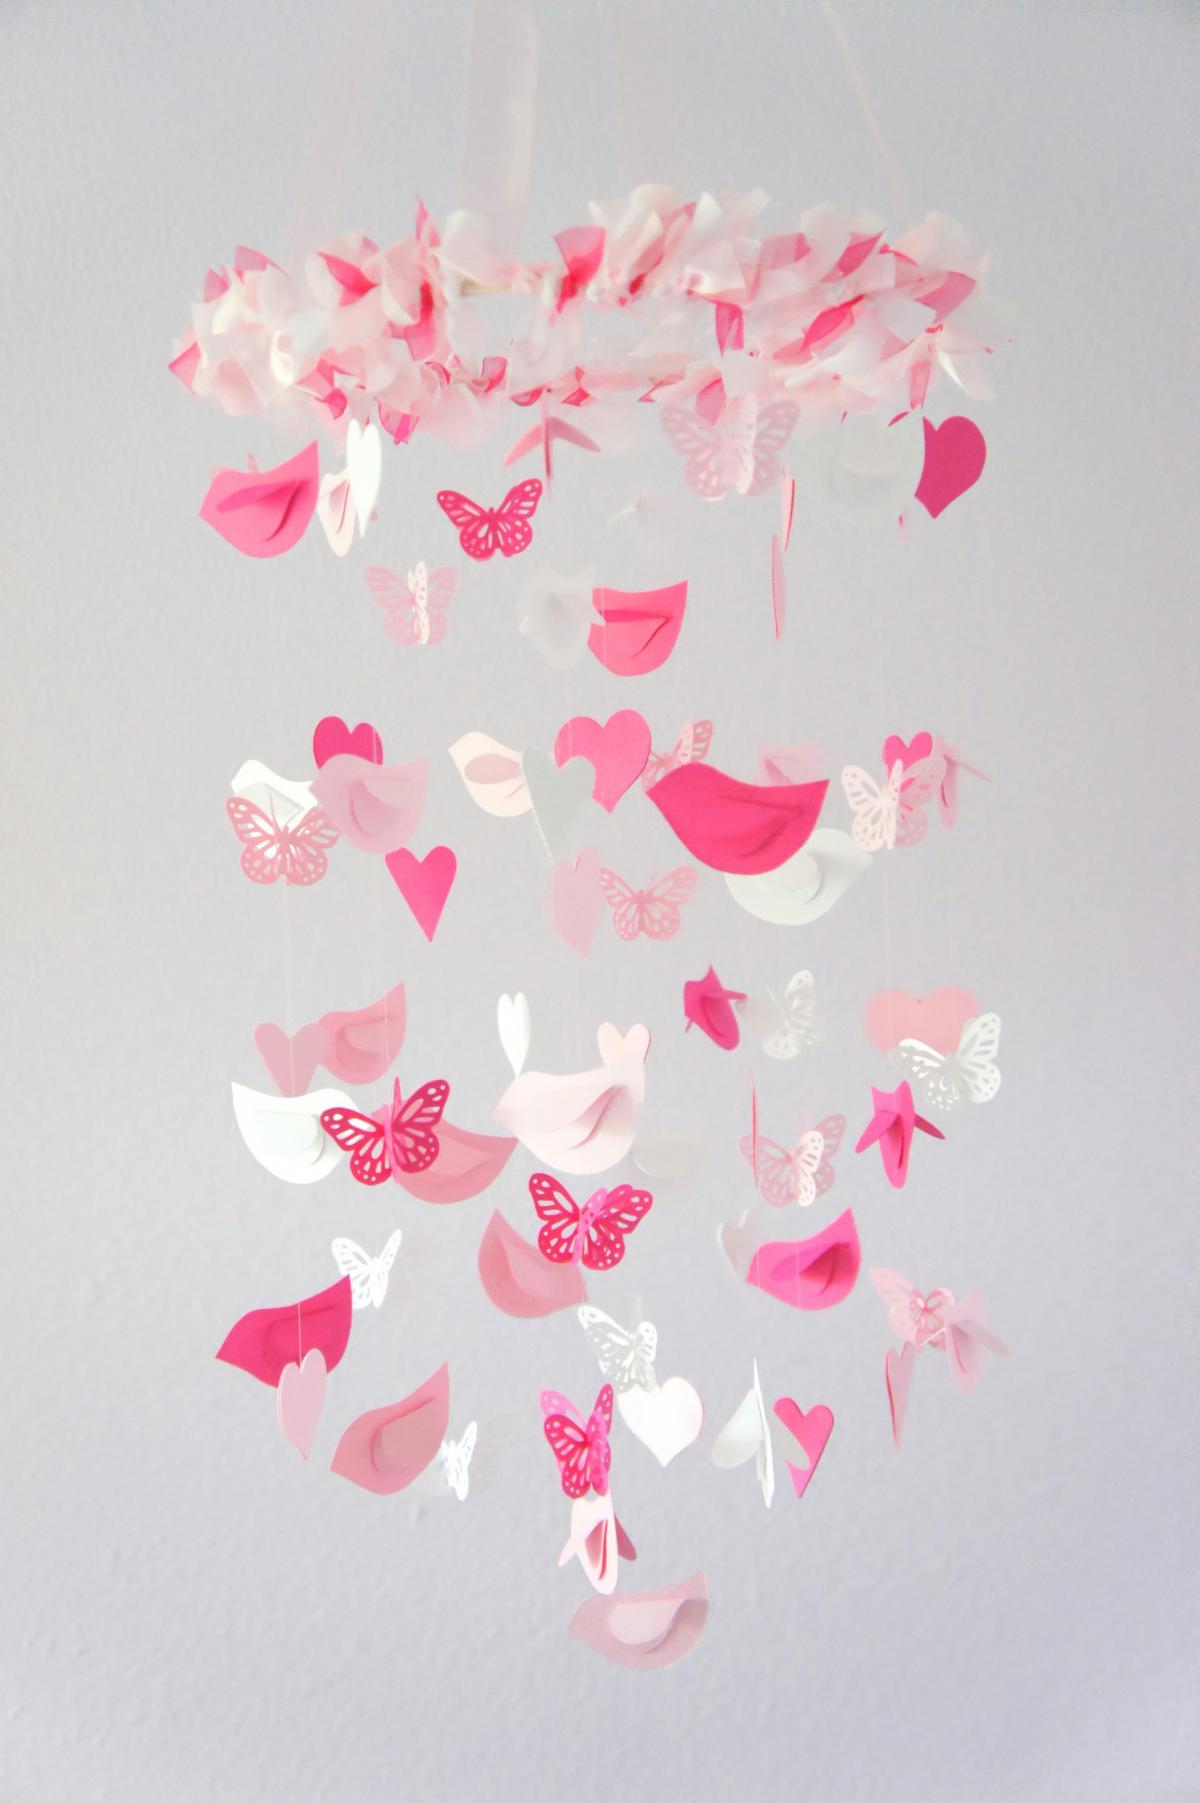 Birds Hearts & Butterflies Mobile- Sweet Baby Girl Pink Nursery Decor Mobile